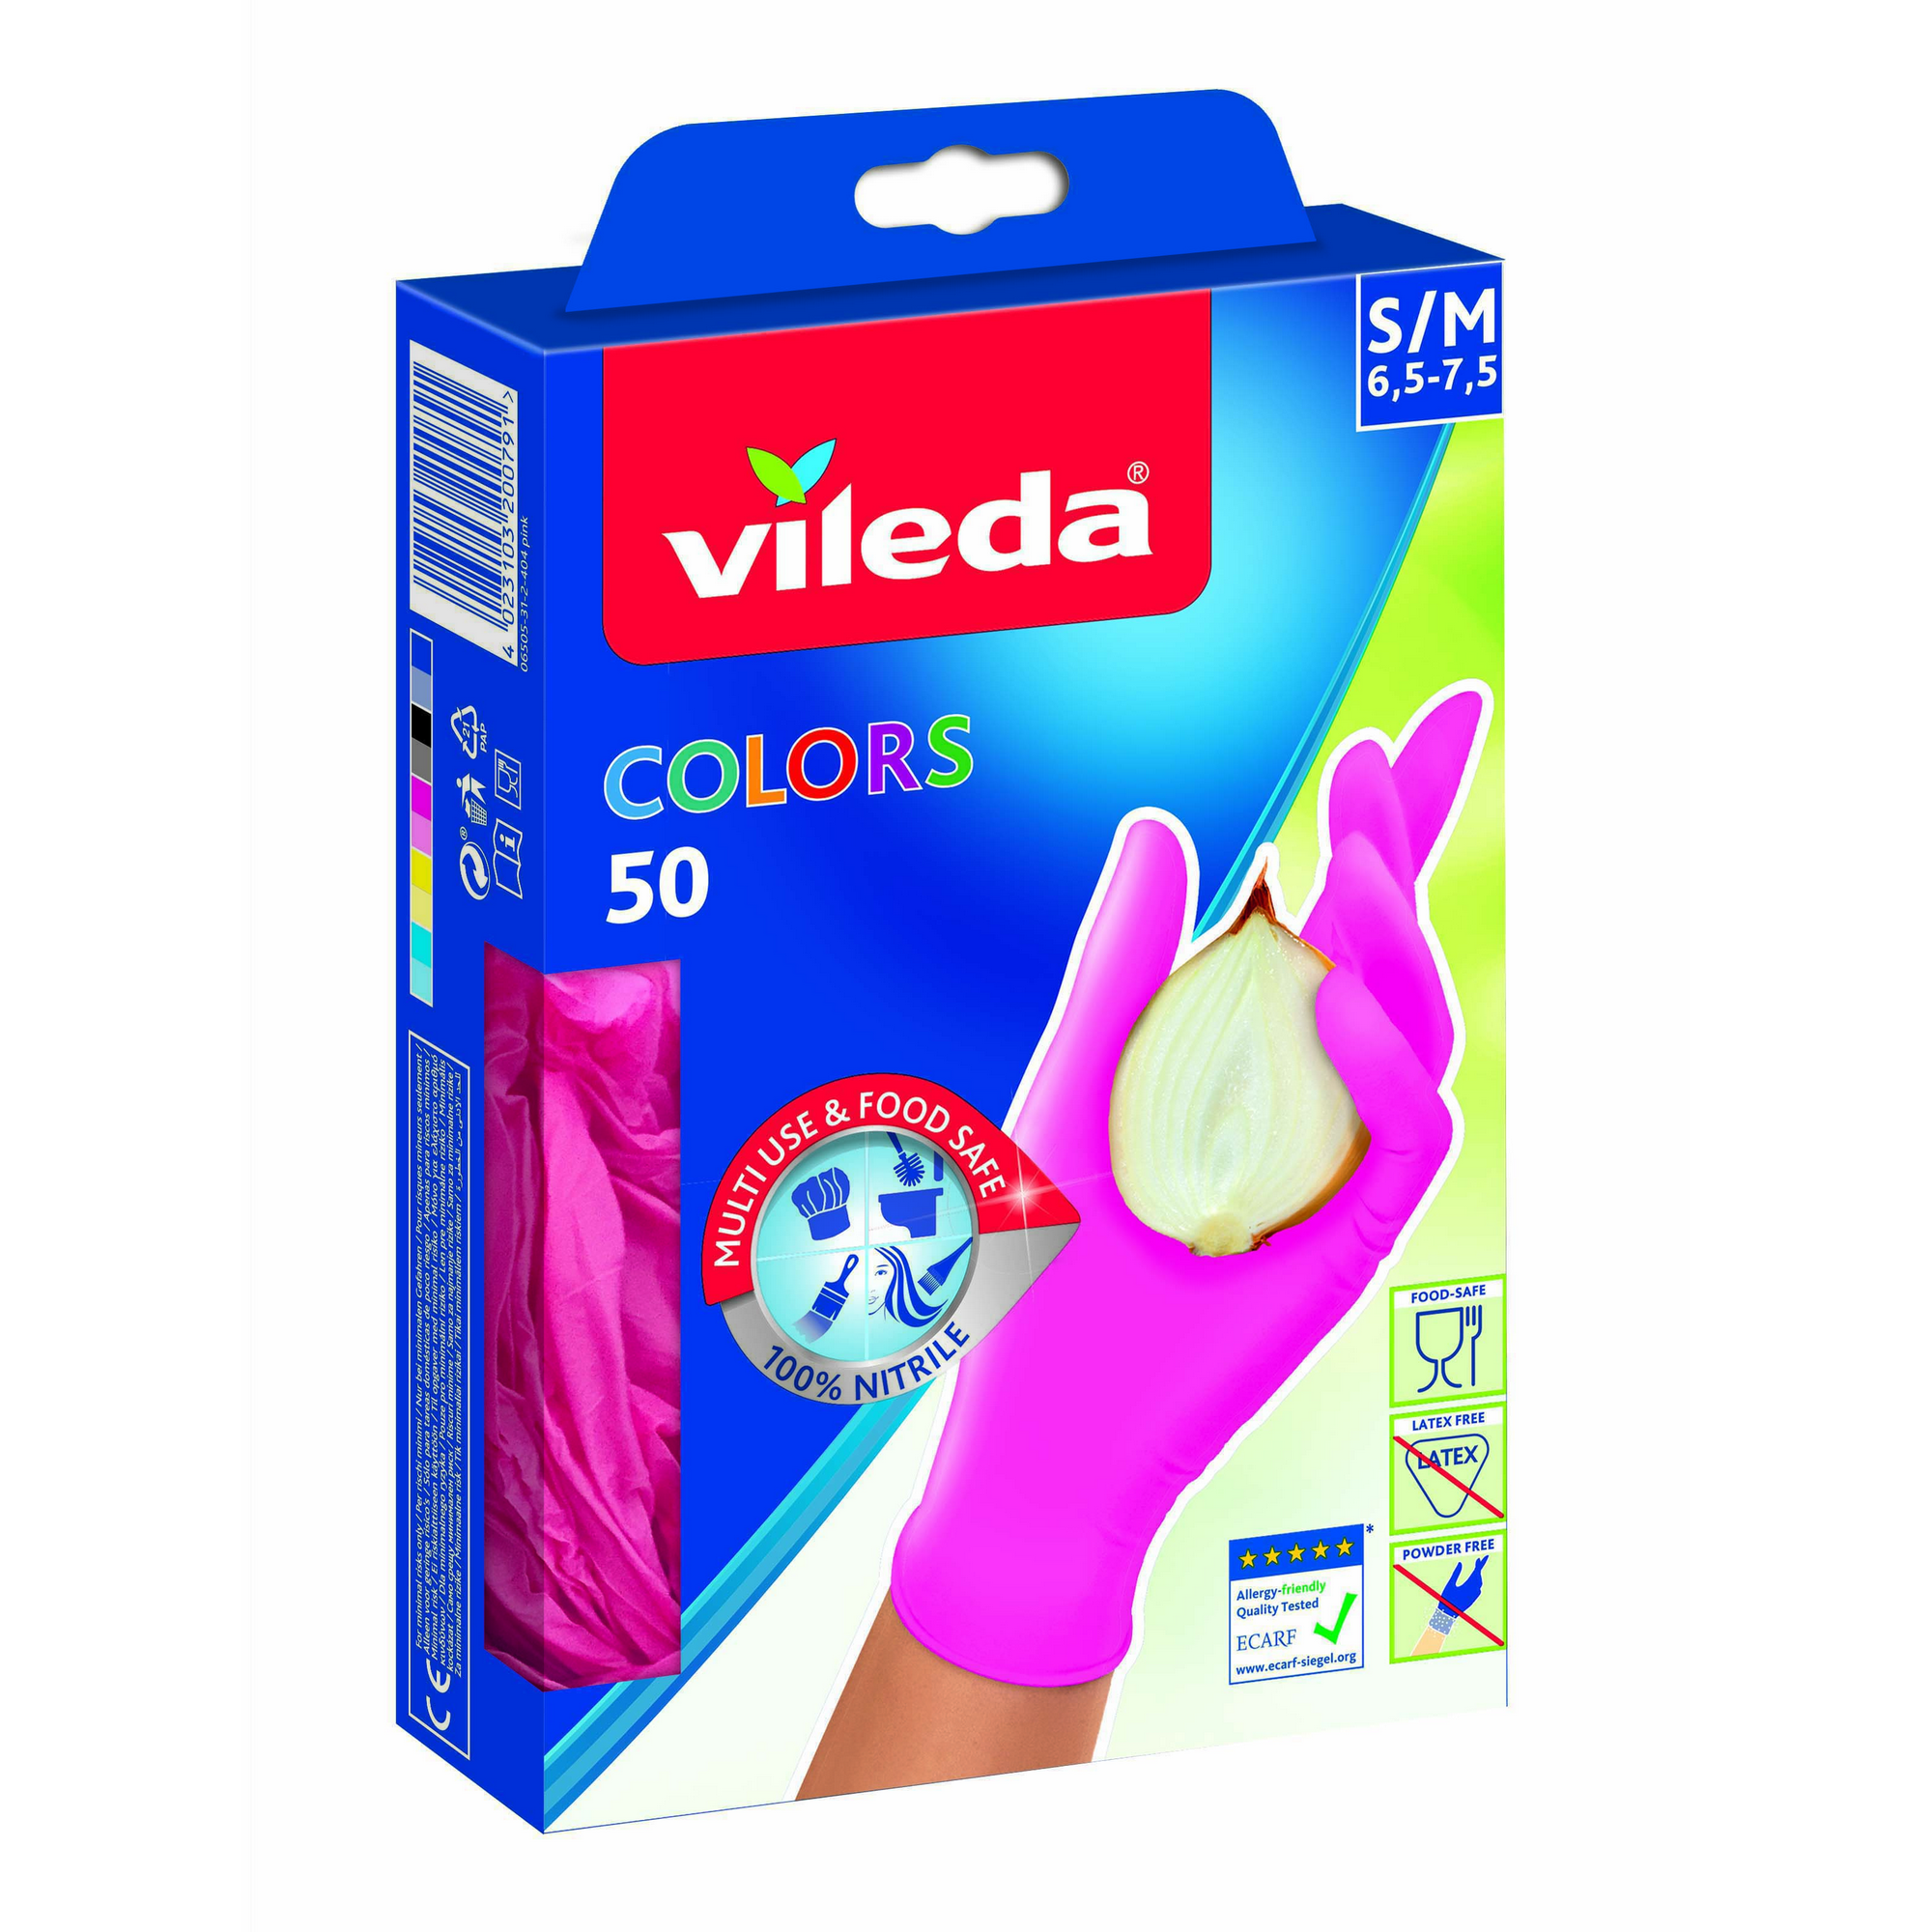 Einmalhandschuhe 'Colors Nitril' Größe S/M 50 Stück, 2 Farben sortiert + product picture